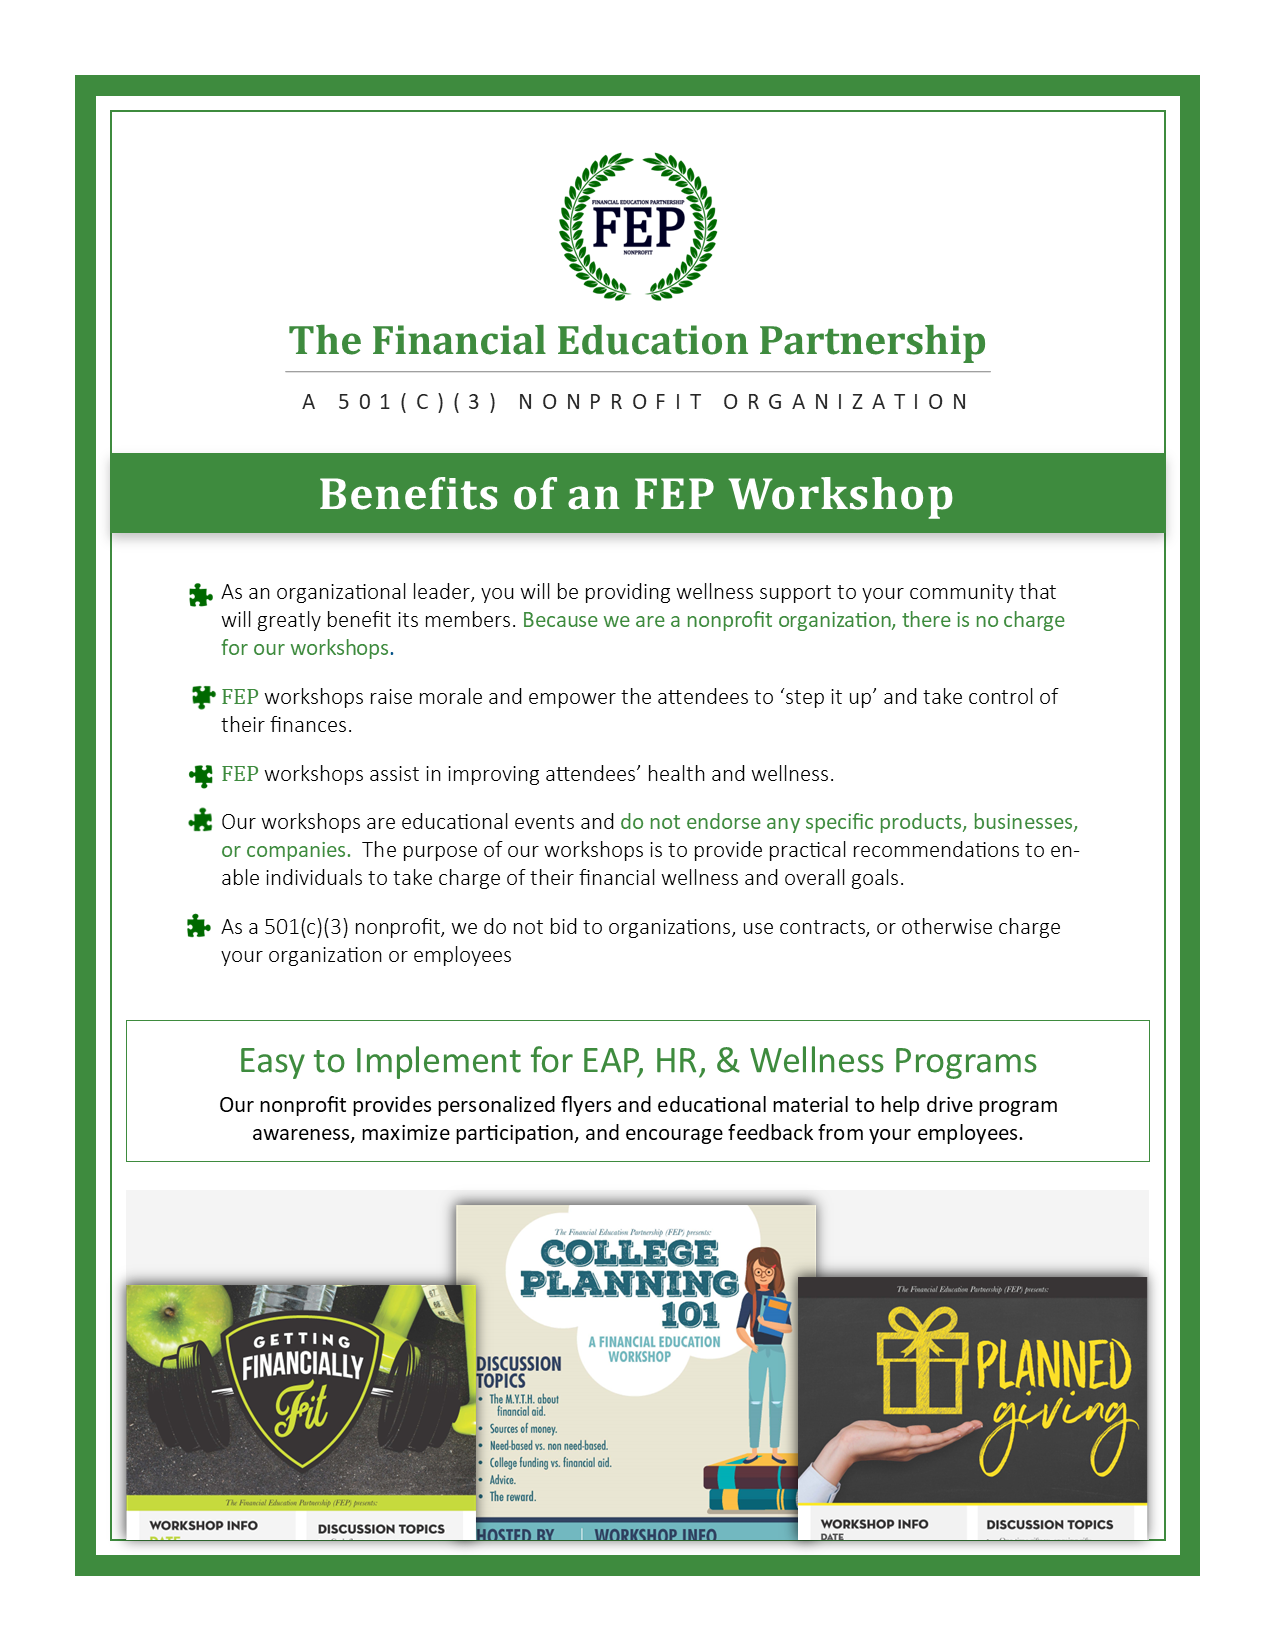 Benefits of an FEP 2020 Financial Education Partnership